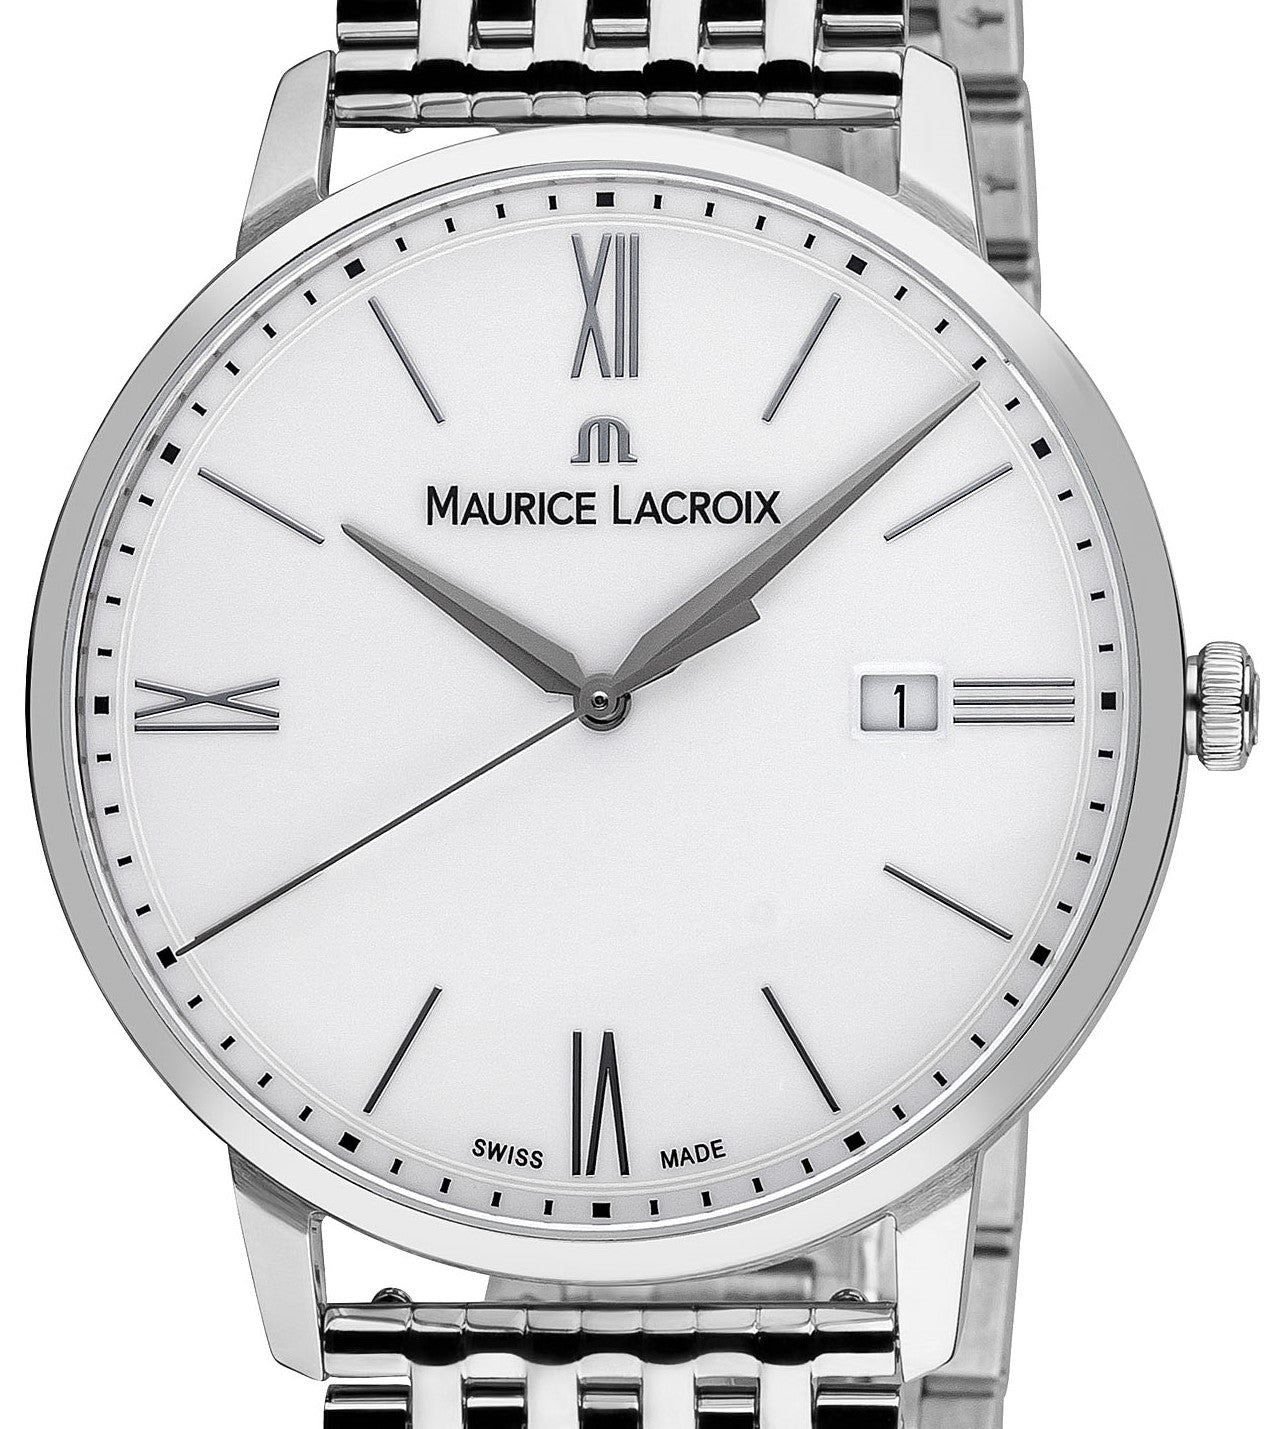 Lacroix Maurice Eliros EL1118-SS002-113-2 Herrenuhr Date